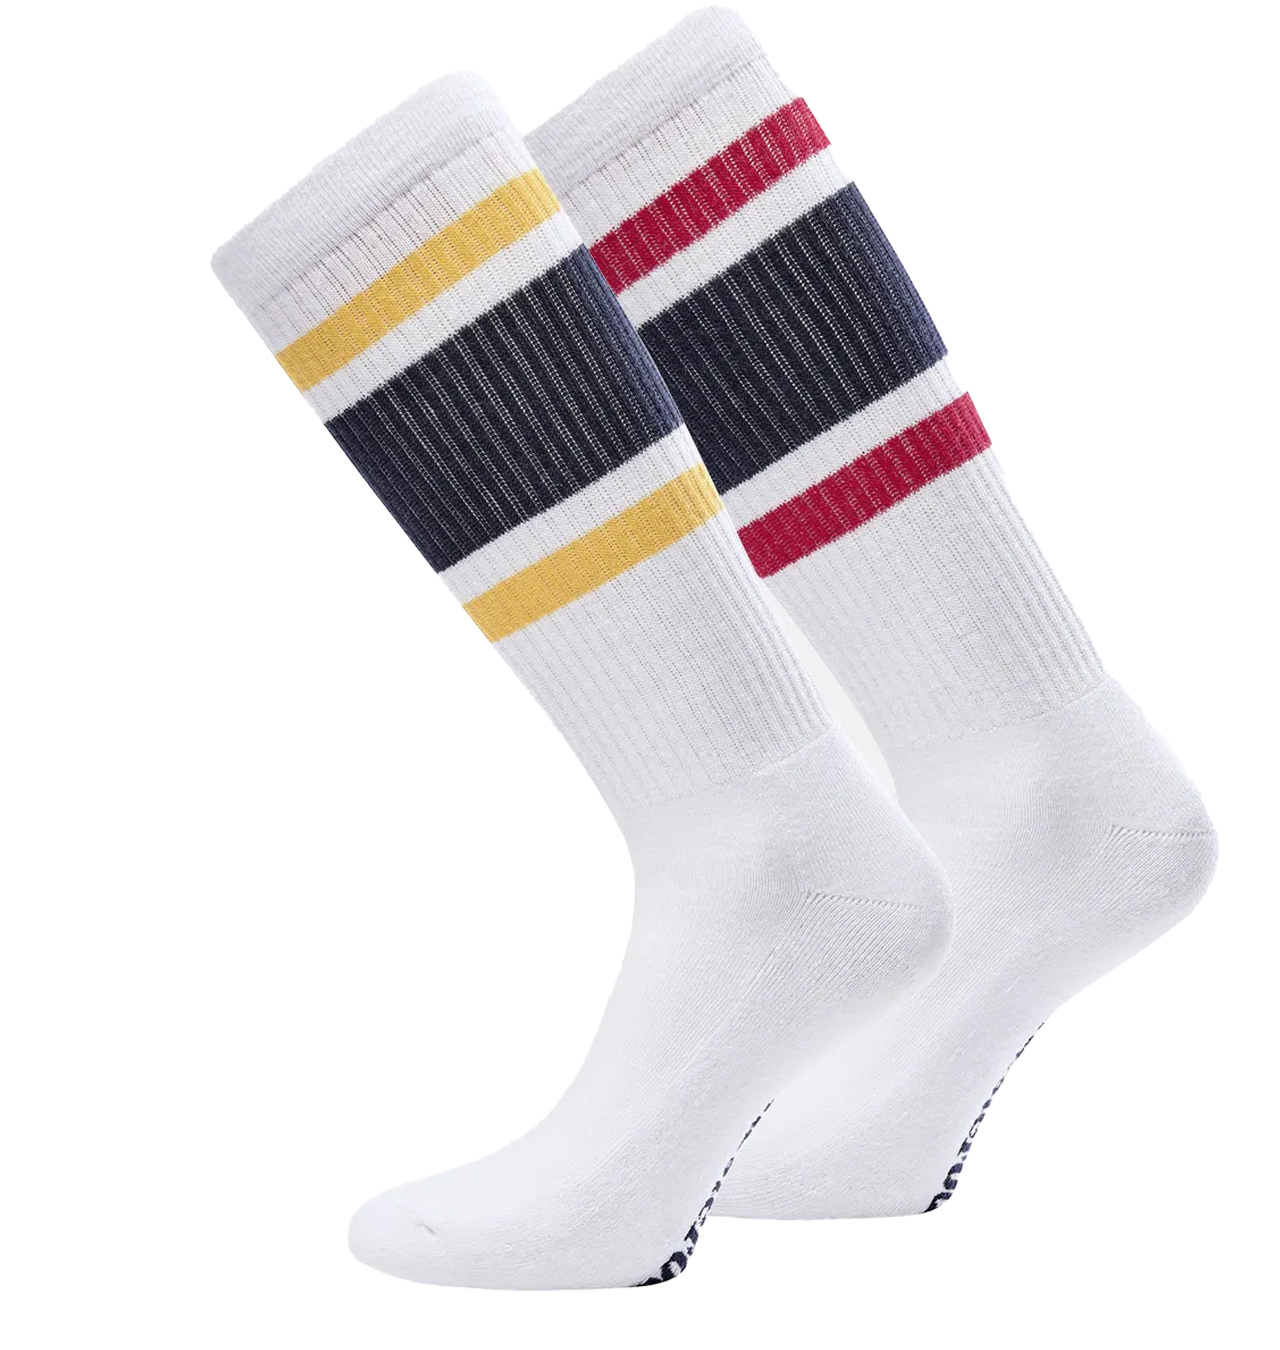 Resteröds - Tennis Socks 2-pack - Navy/Red/Yellow